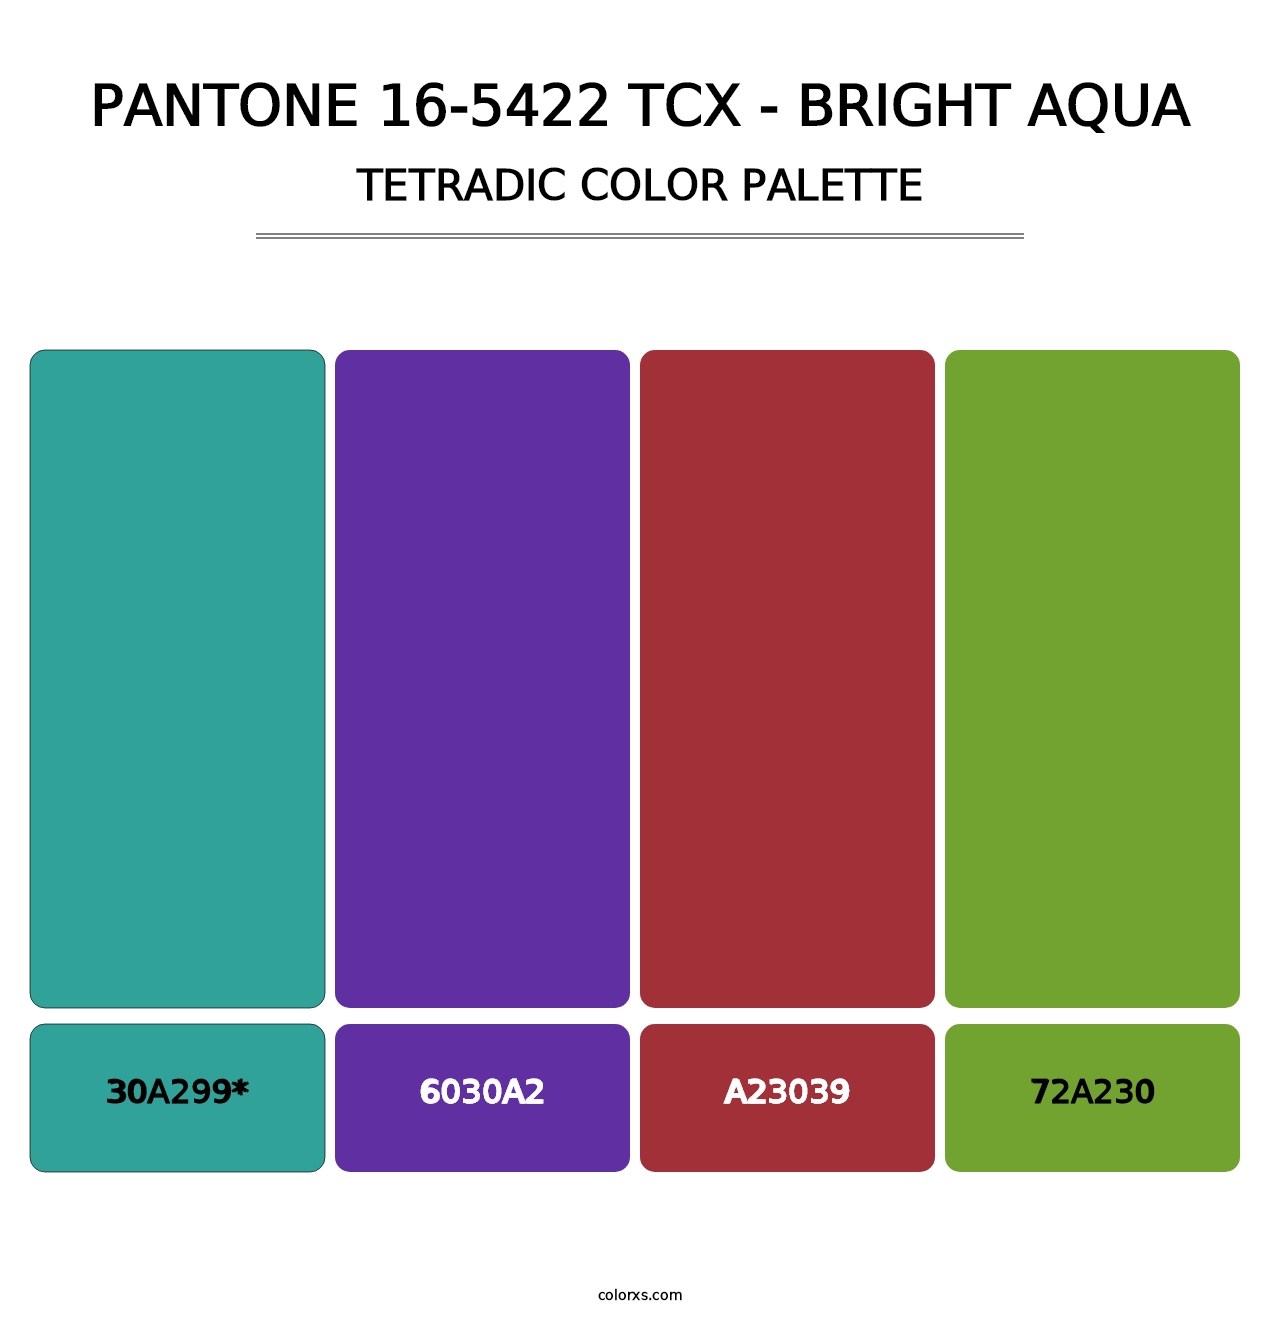 PANTONE 16-5422 TCX - Bright Aqua - Tetradic Color Palette